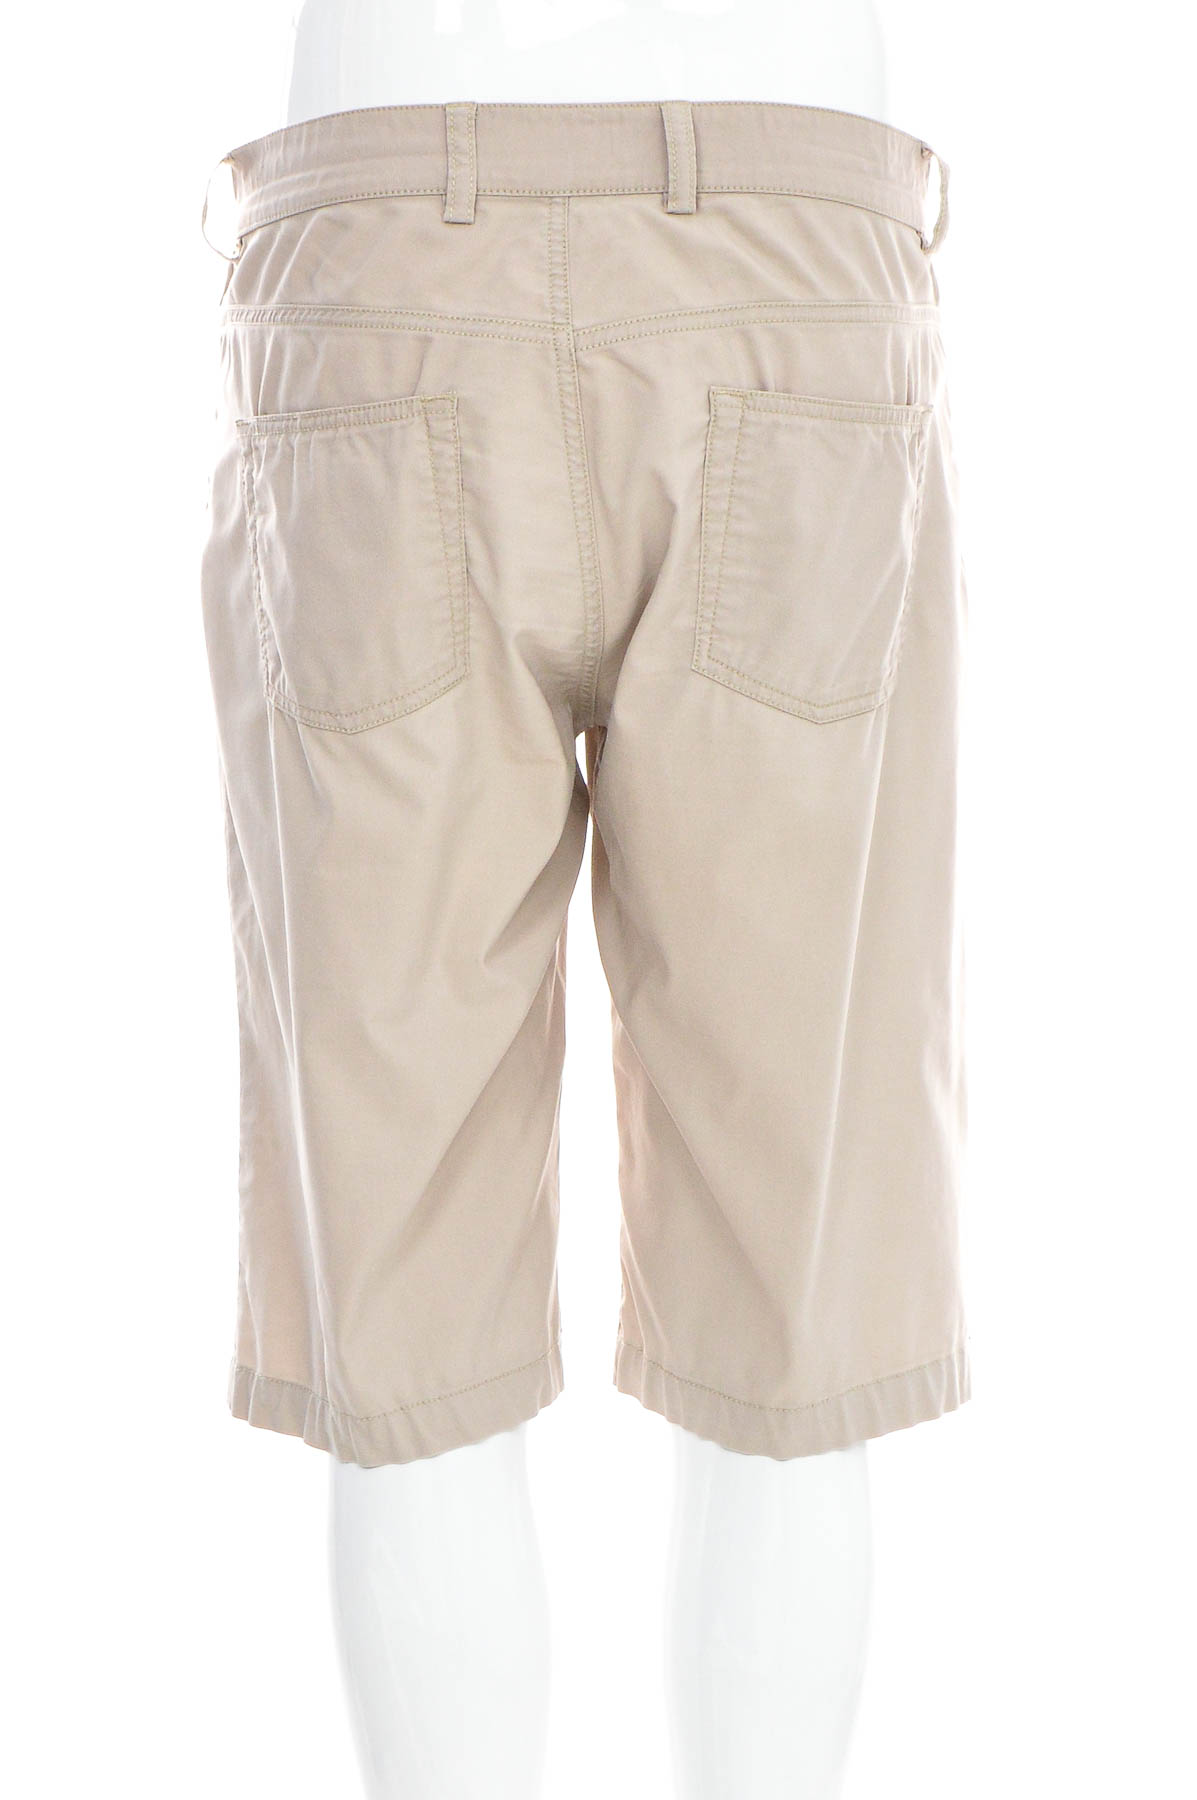 Female shorts - Golfino - 1